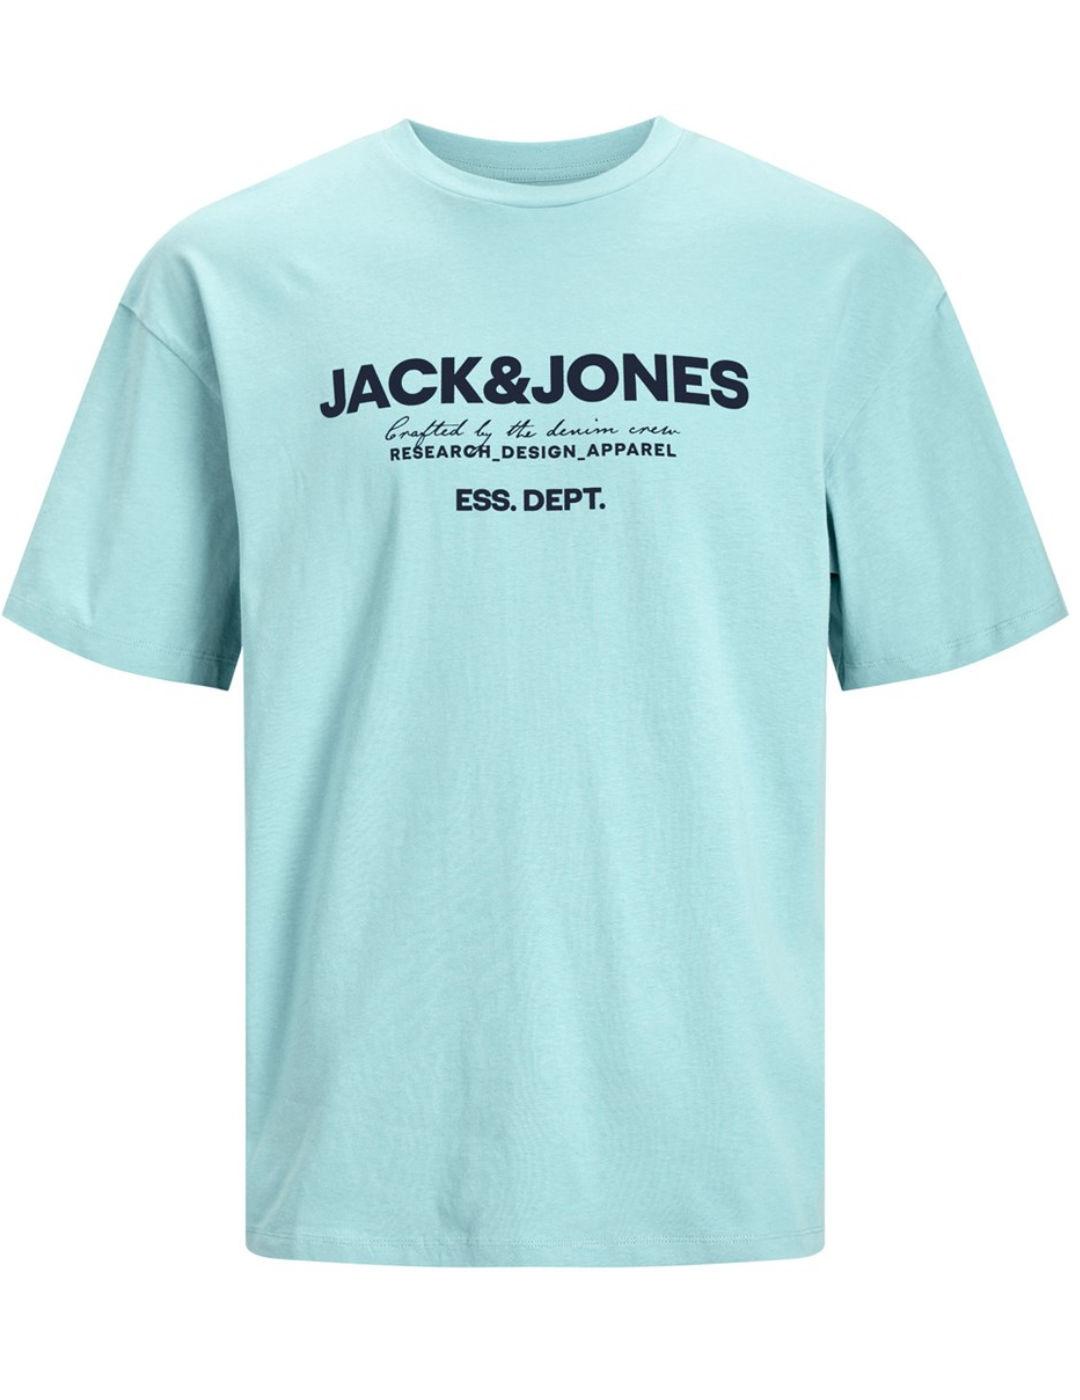 Camiseta Jack&Jones Ale turquesa manga corta para hombre